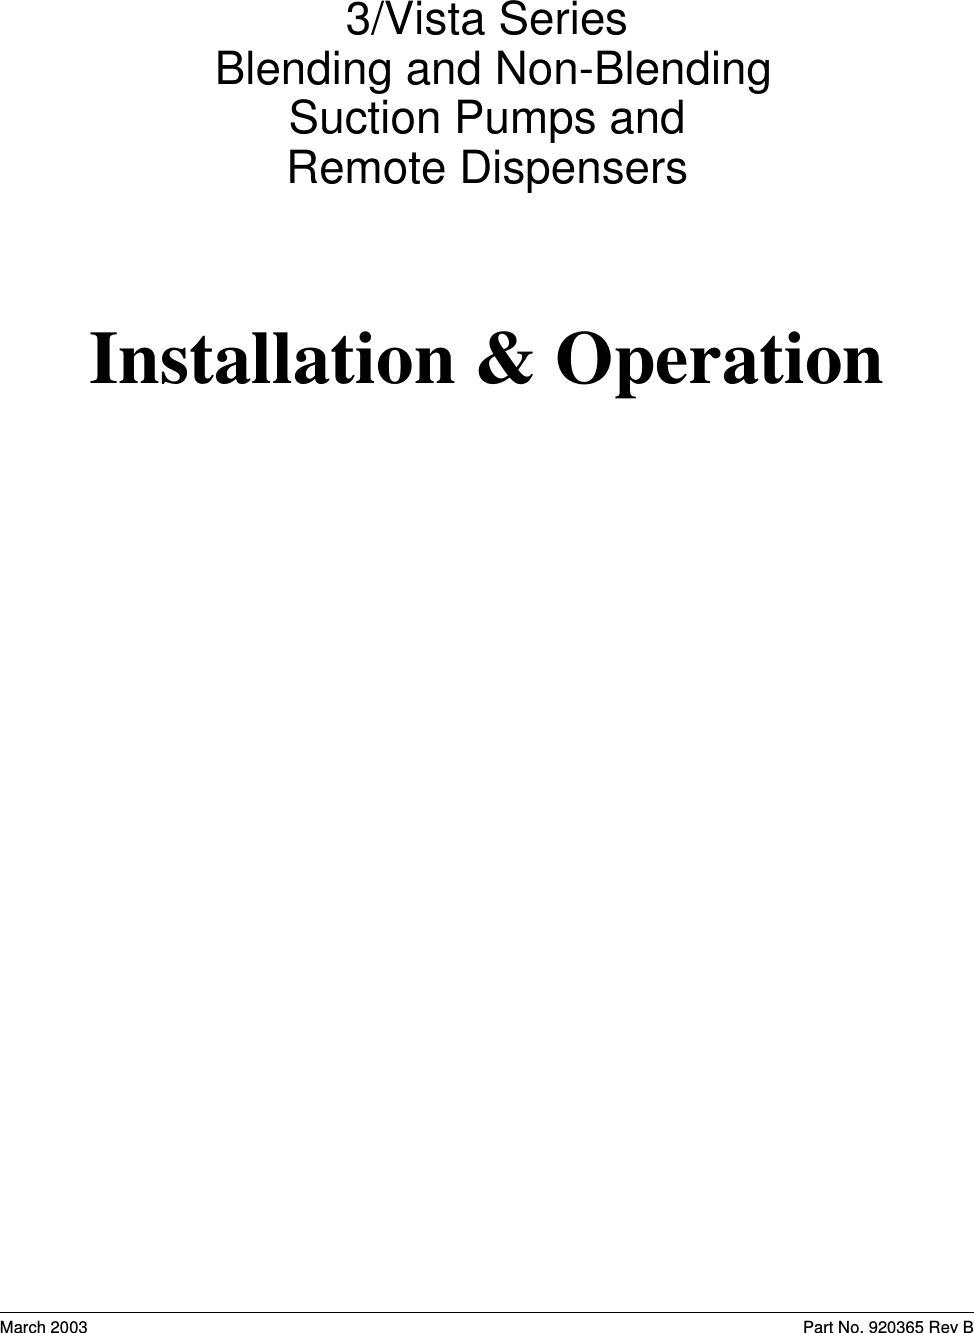 March 2003 Part No. 920365 Rev B3/Vista Series Blending and Non-Blending Suction Pumps andRemote DispensersInstallation &amp; Operation